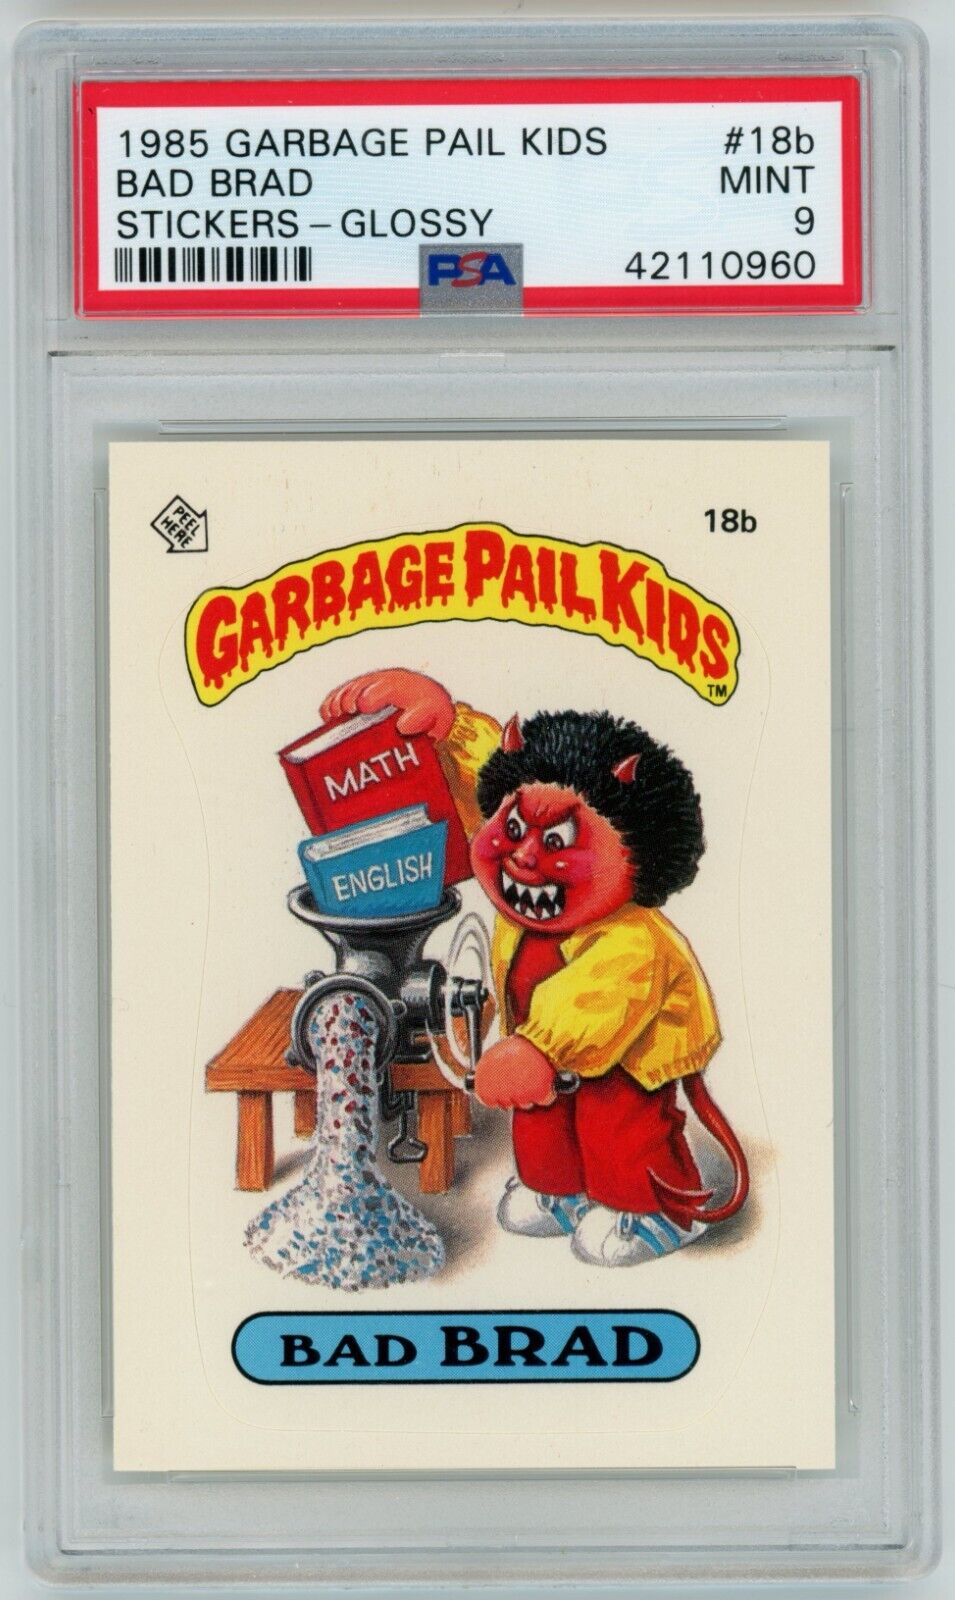 1985 Topps OS1 Garbage Pail Kids Series 1 BAD BRAD 18b GLOSSY Card PSA 9 MINT